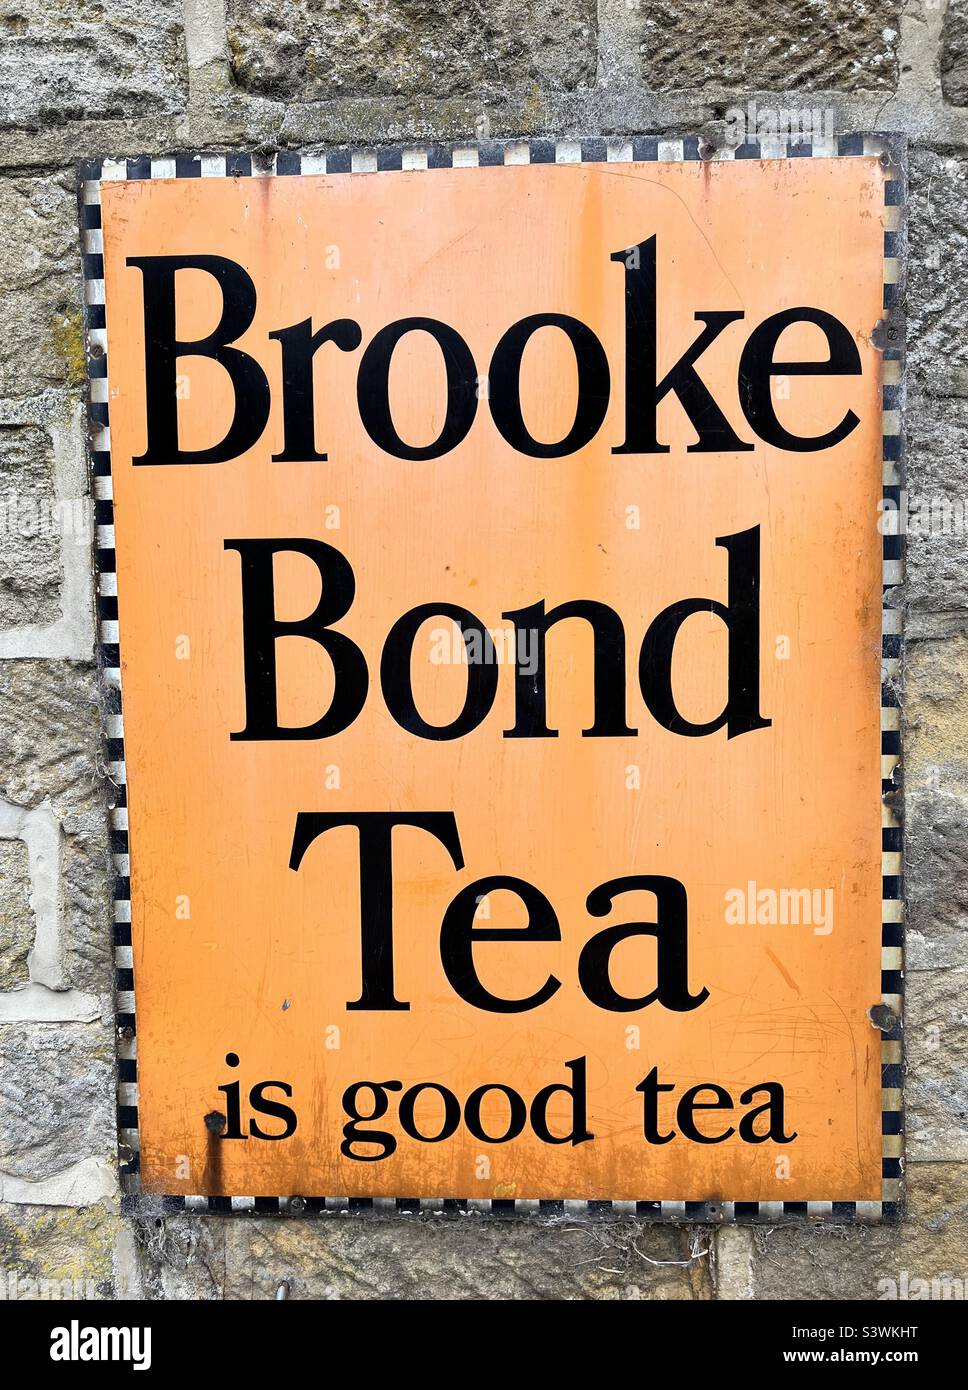 Old metal advertising sign for Brooke Bond tea Stock Photo